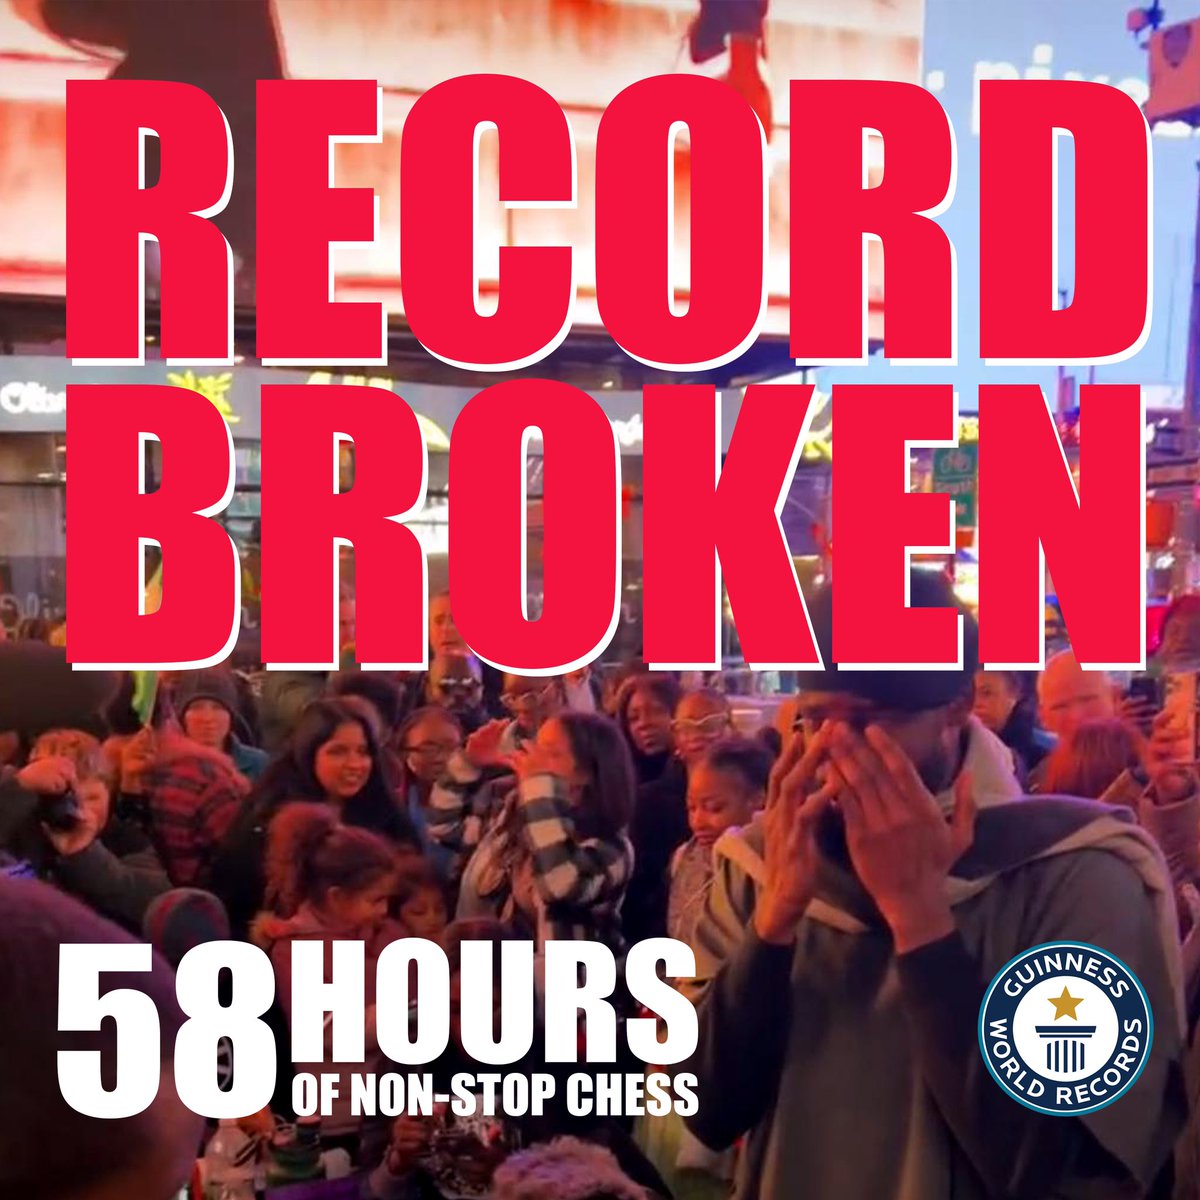 WE HAVE DONE IT. 

#LongestChessMarathon #58Hours #RecordBroken #NewRecordSet

🇳🇬🇳🇬🇳🇬🇳🇬🇳🇬🇳🇬🇳🇬🇳🇬🇳🇬🇳🇬🇳🇬🇳🇬🇳🇬